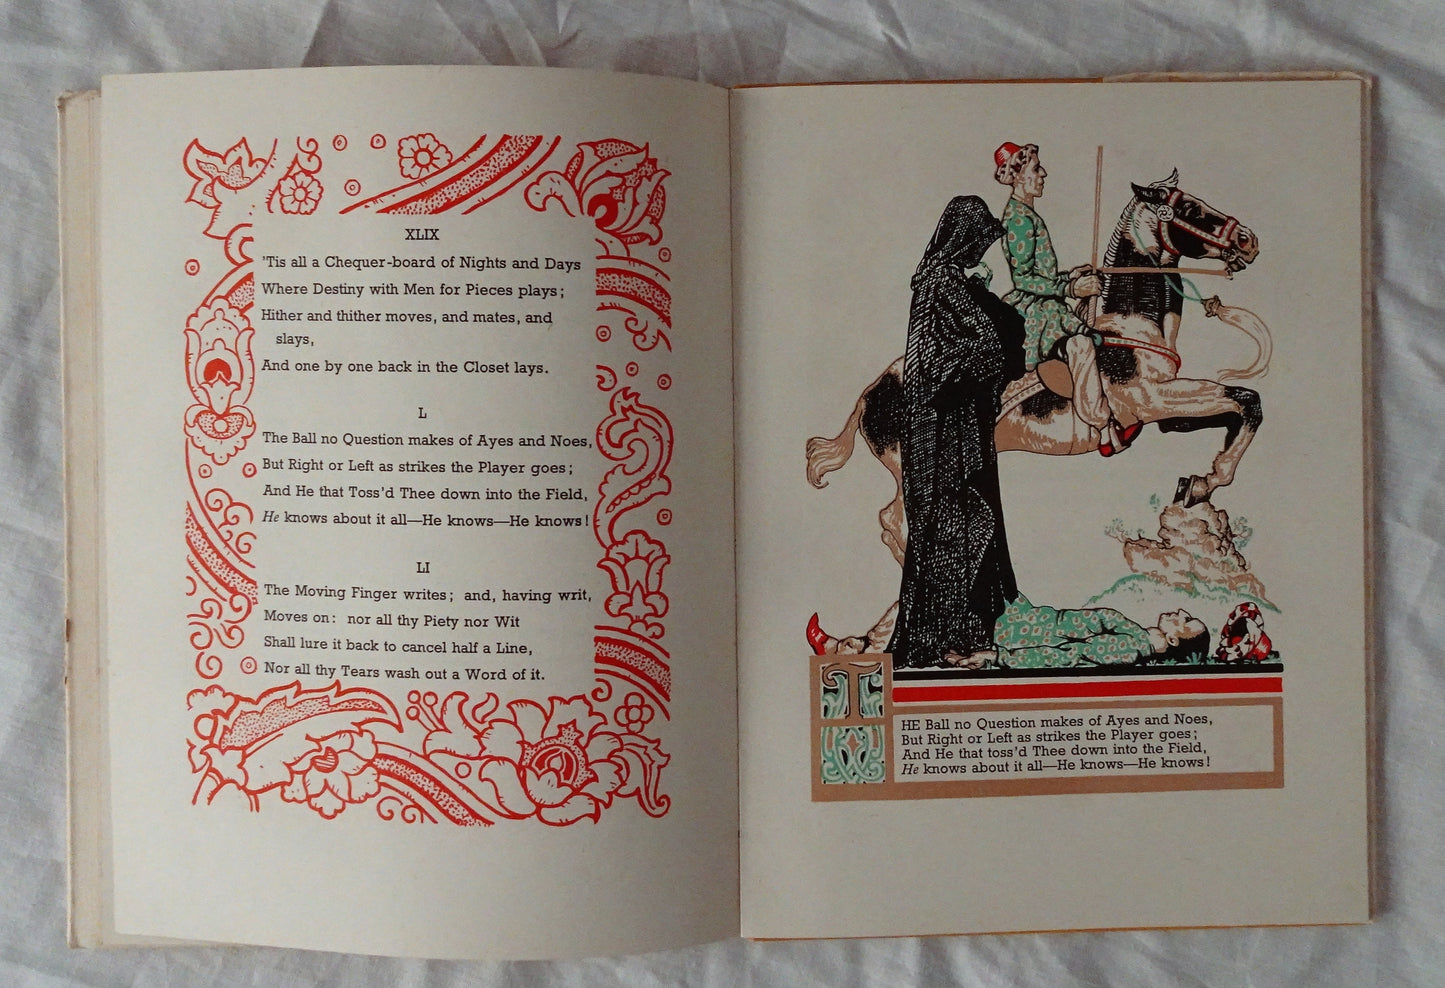 Rubaiyat of Omar Khayyam illustrated by E. A. Cox